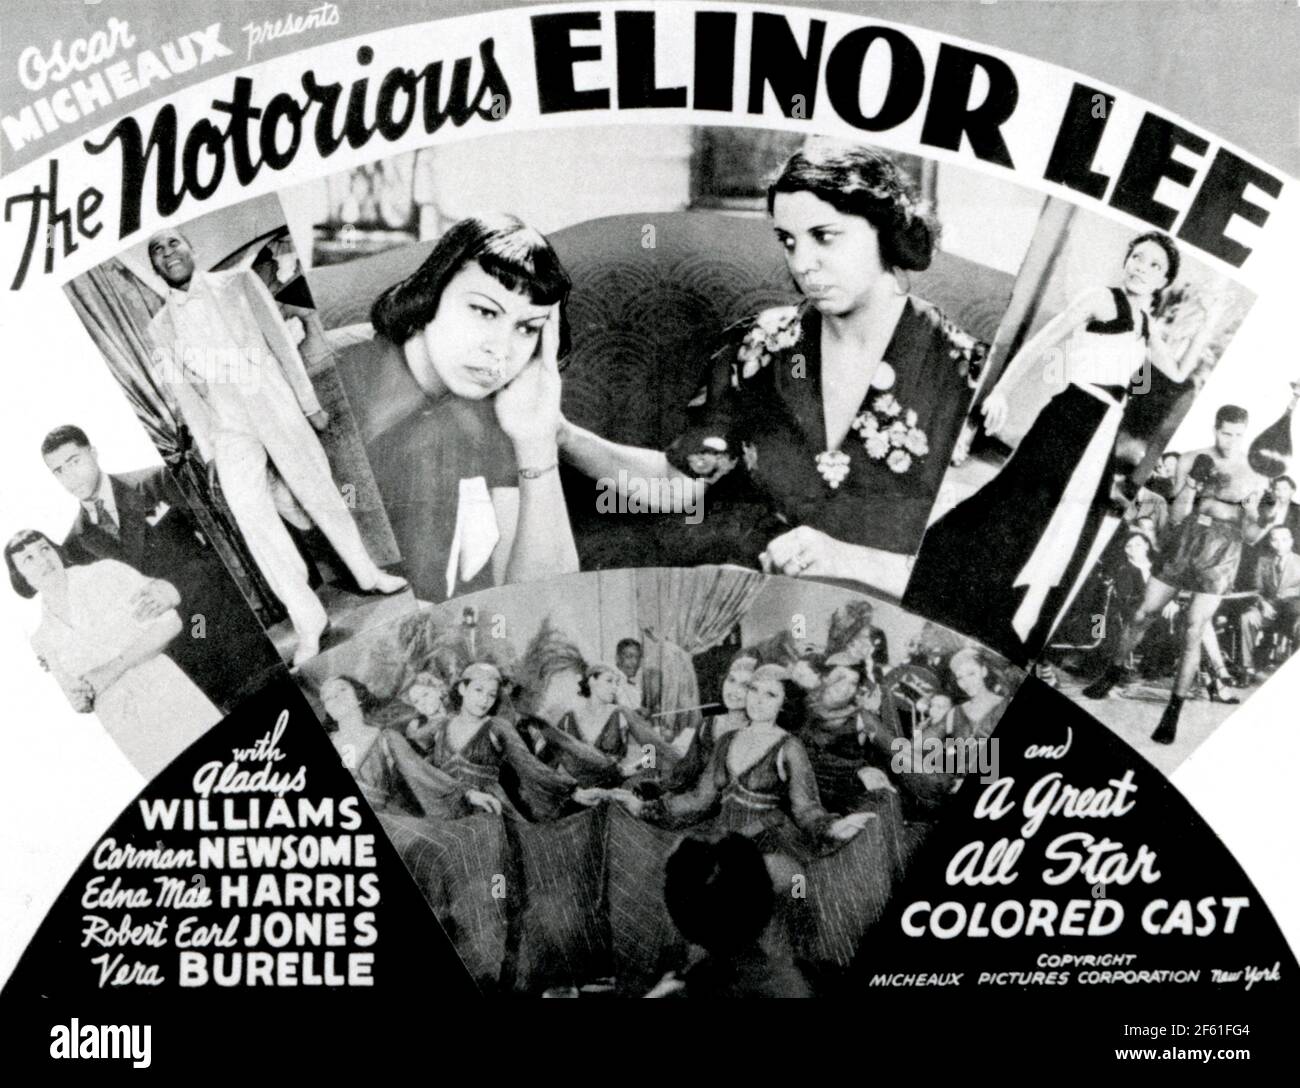 Oscar Micheaux, The Notorious Elinor Lee, 1940 Stock Photo